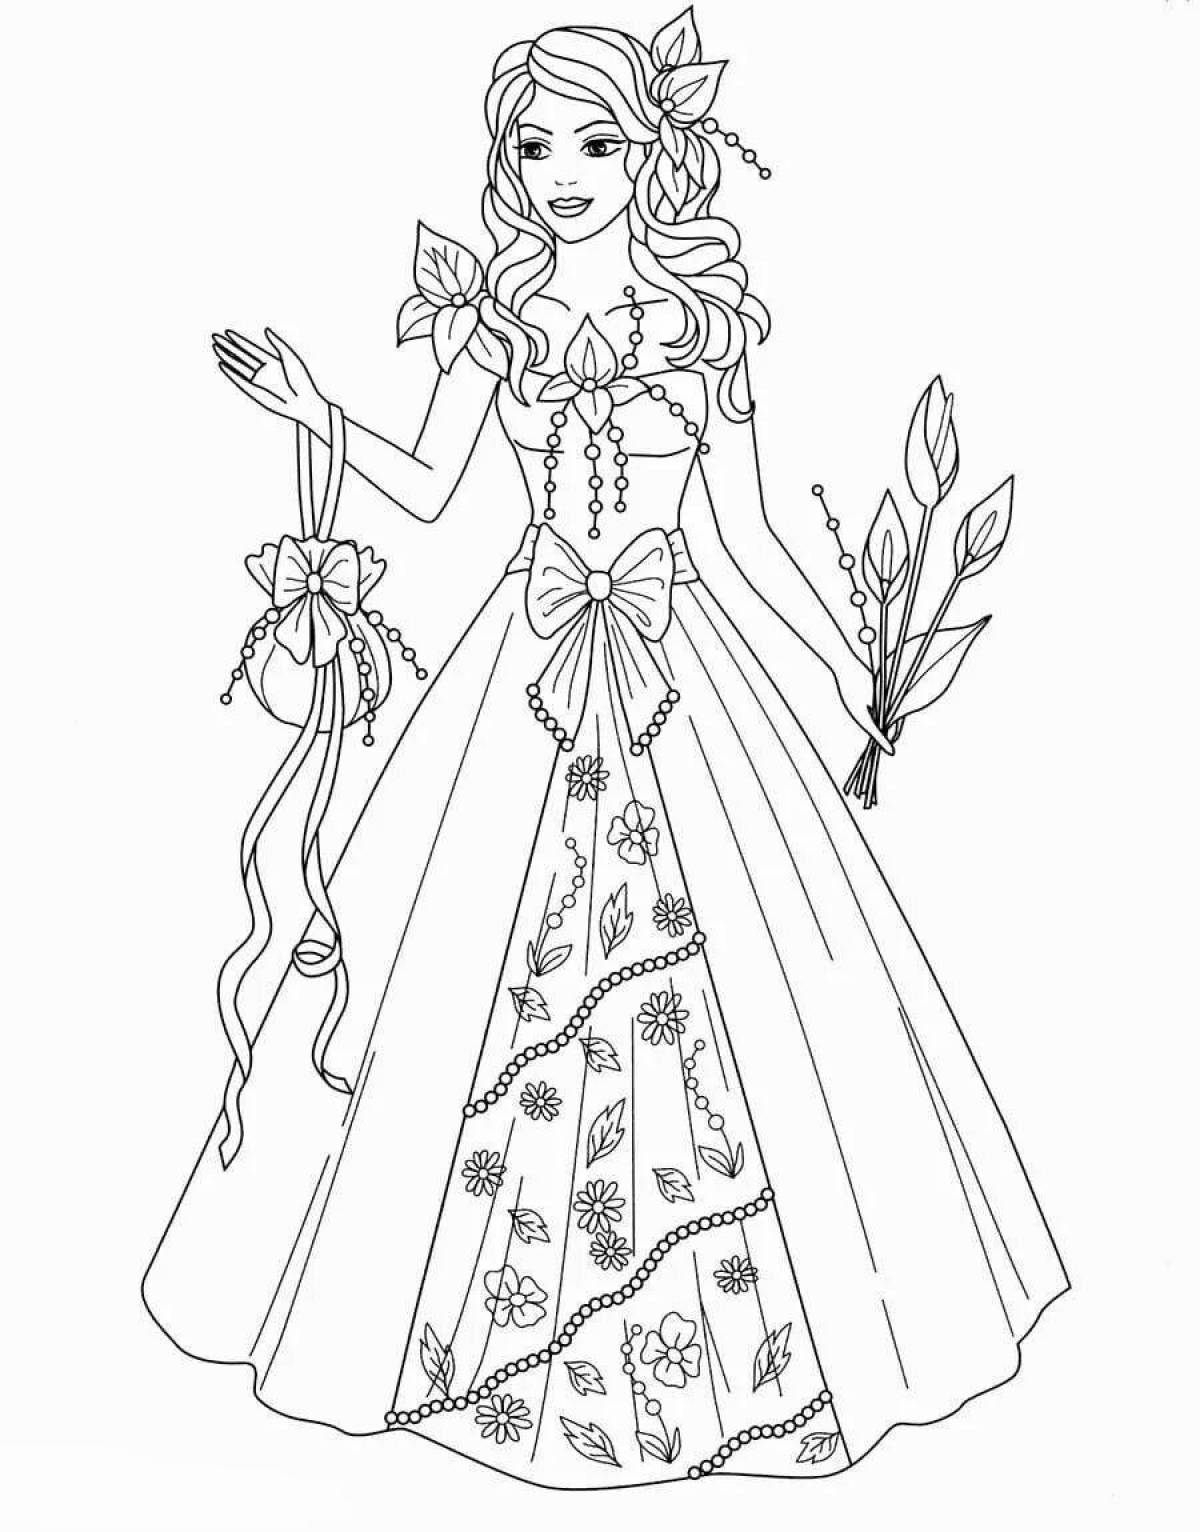 Fairy princess dress coloring book